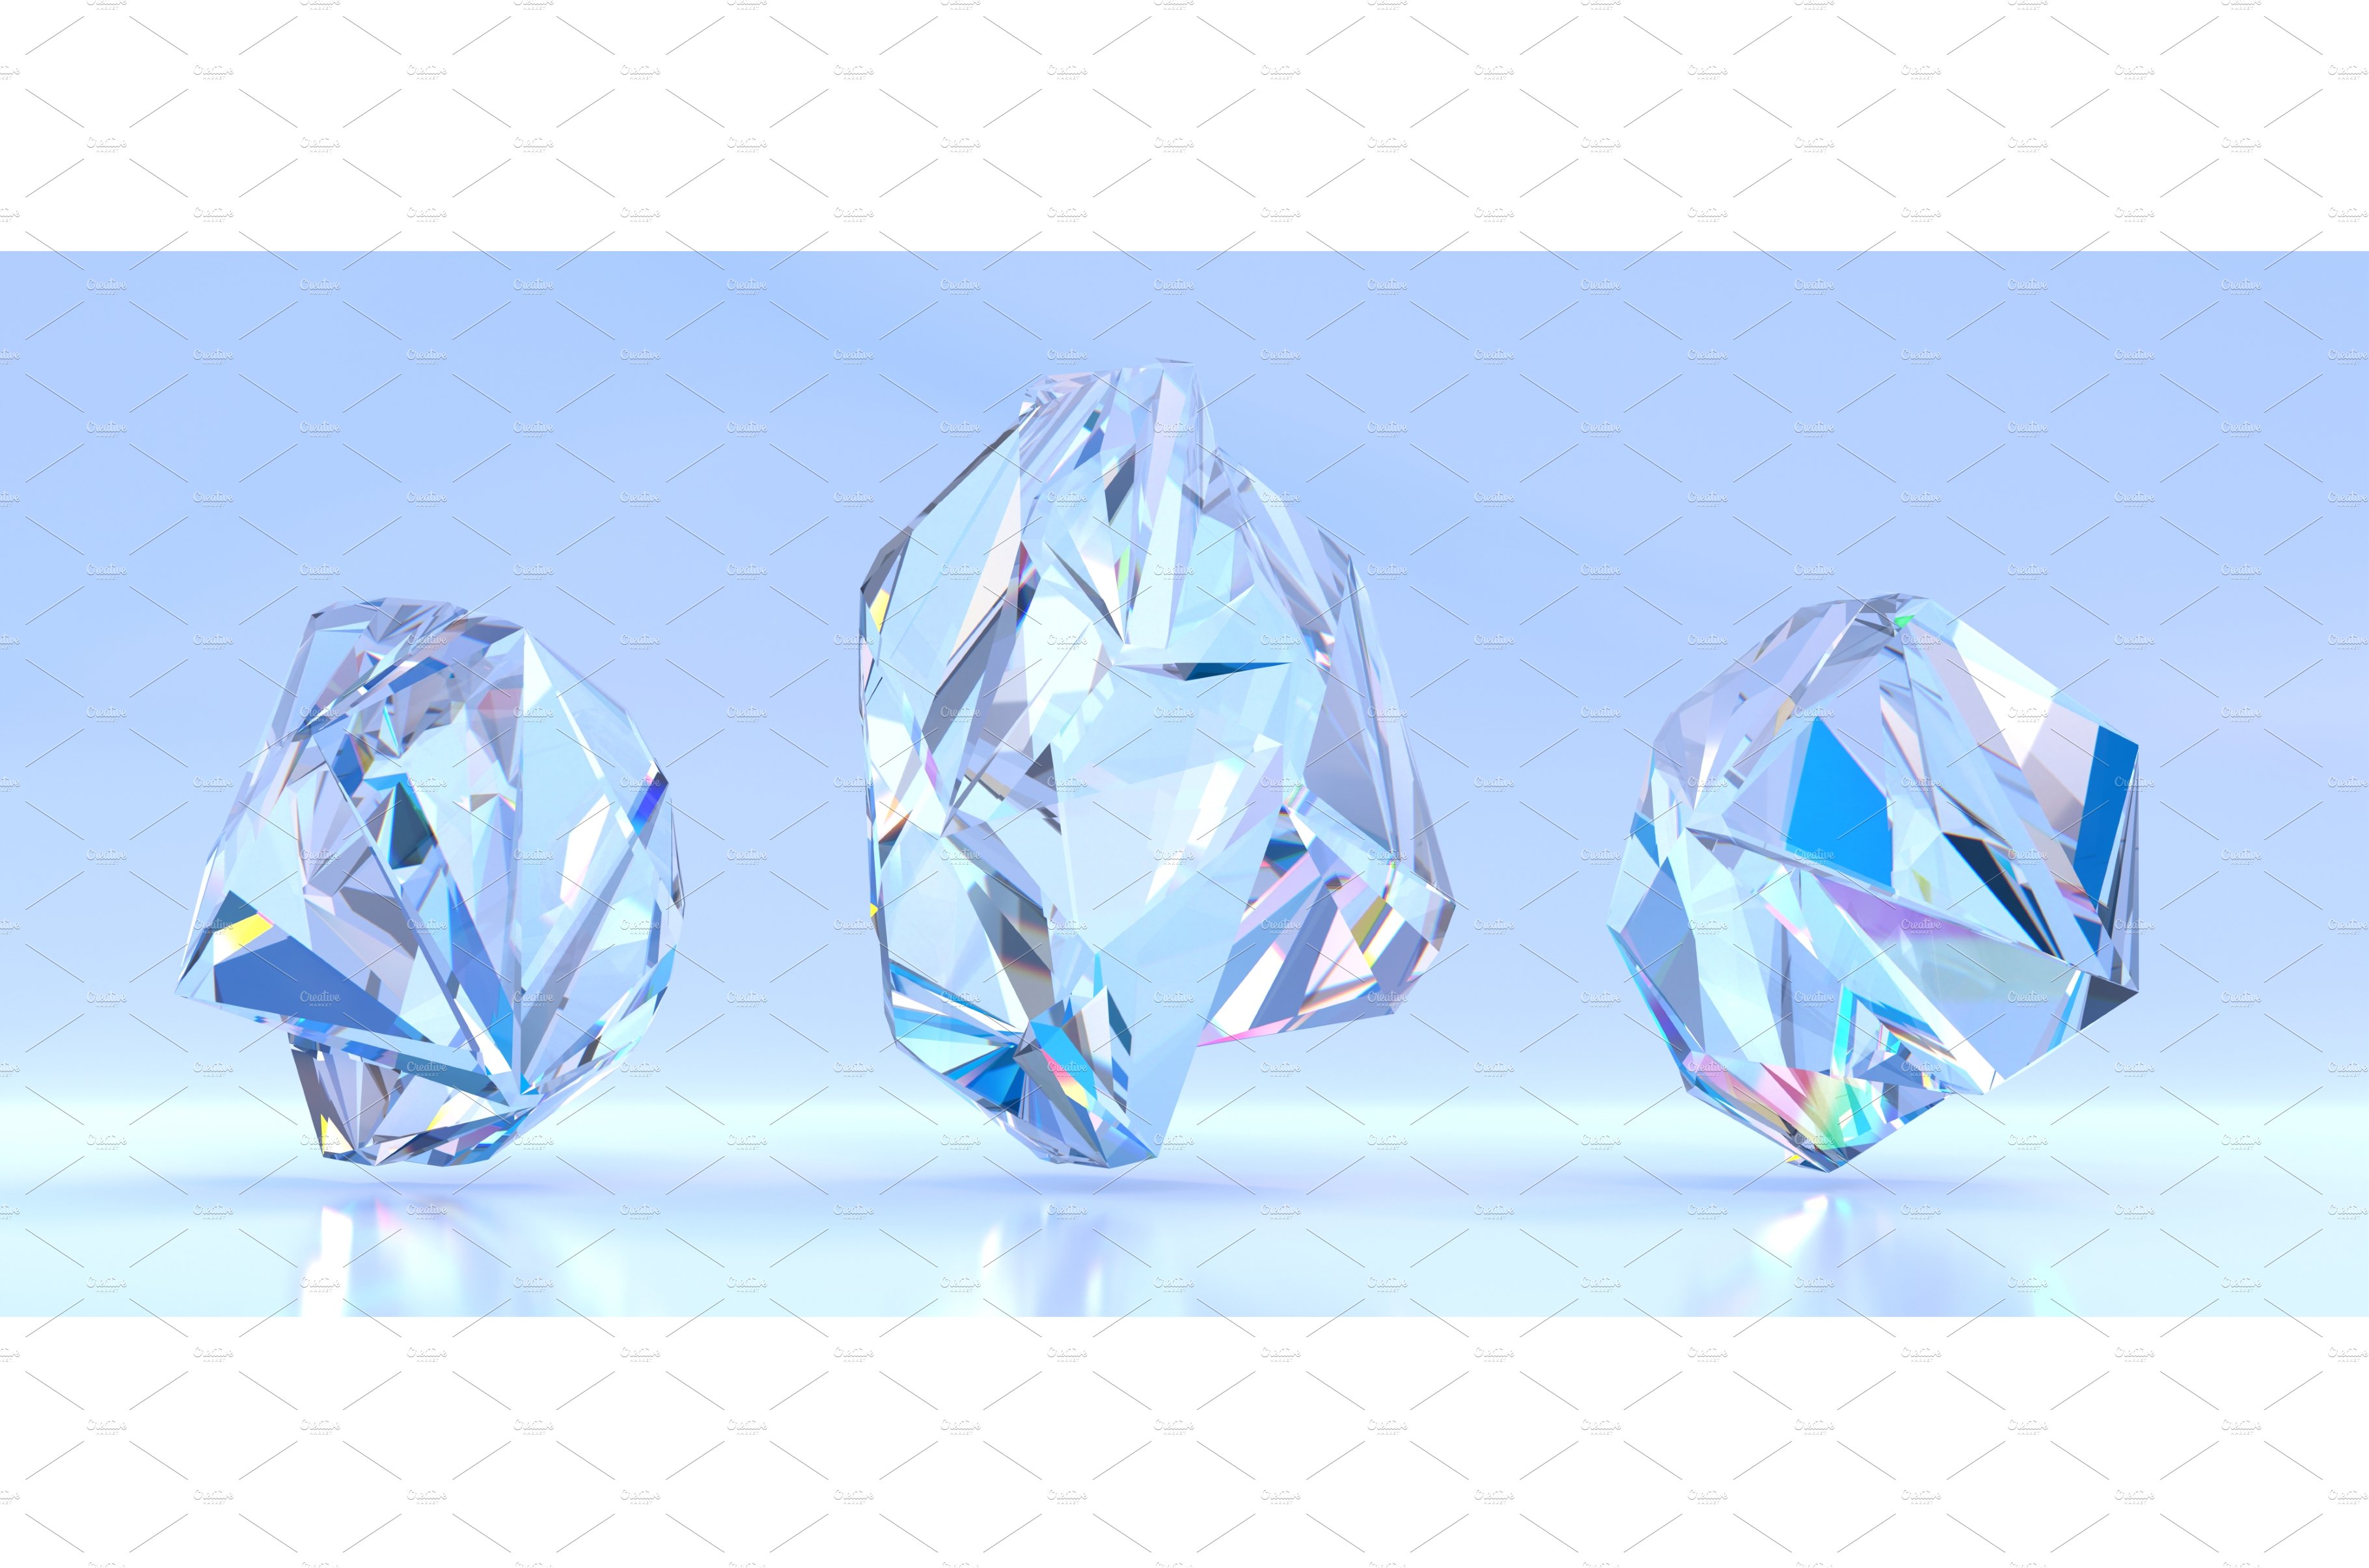 Crystal gems, transparent jewel cover image.